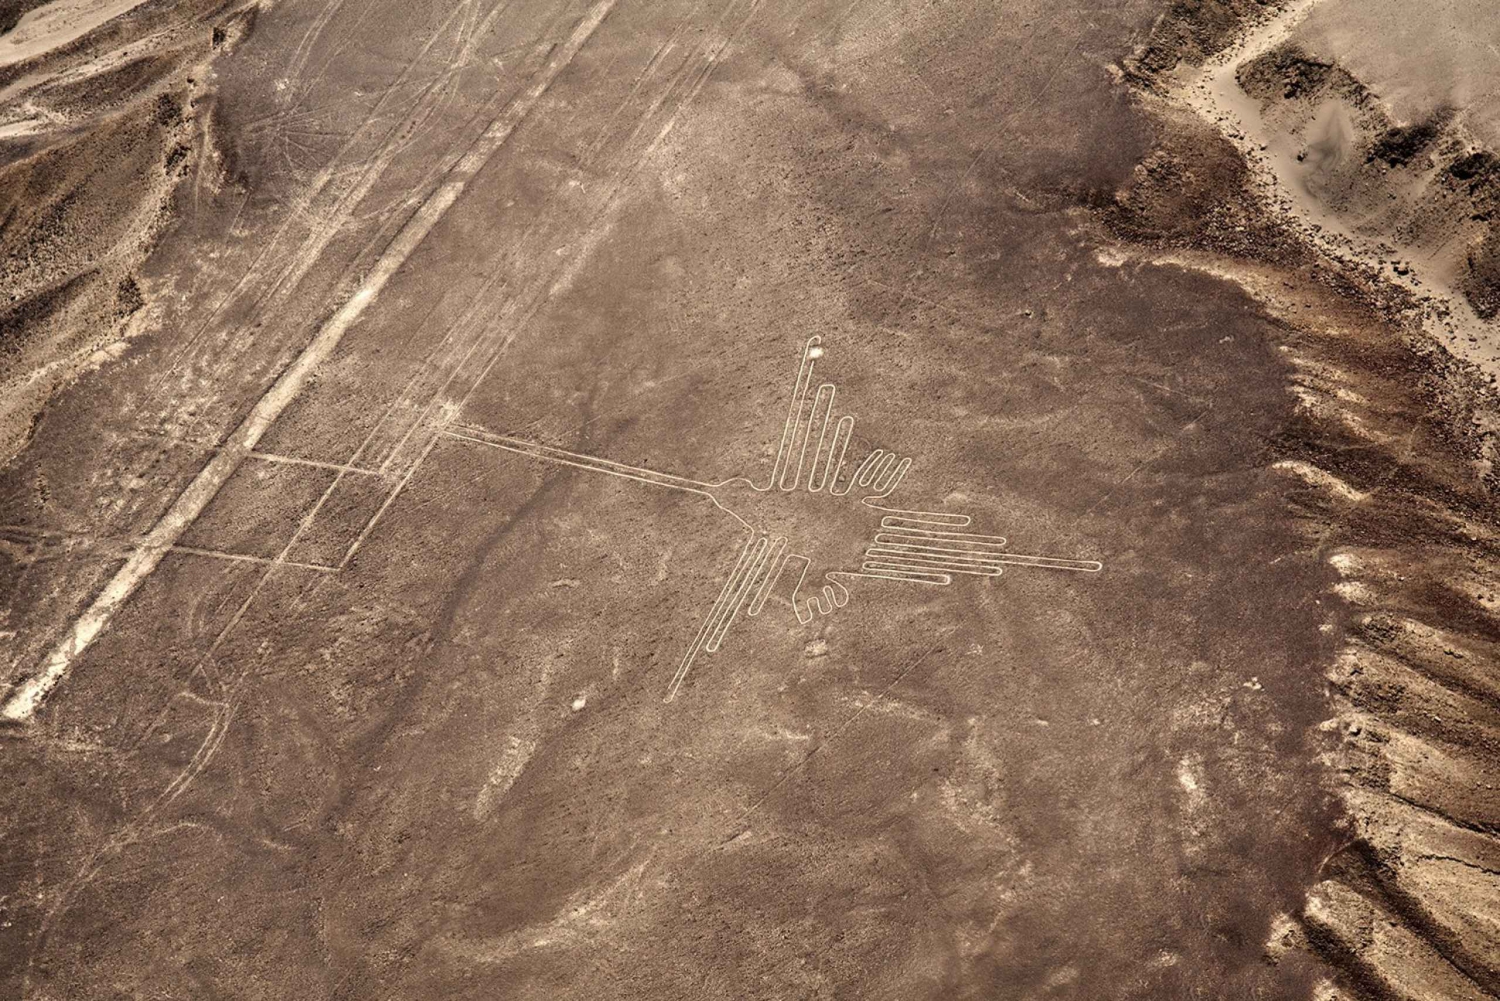 Von Pisco oder Paracas: Nazca Lines Flug